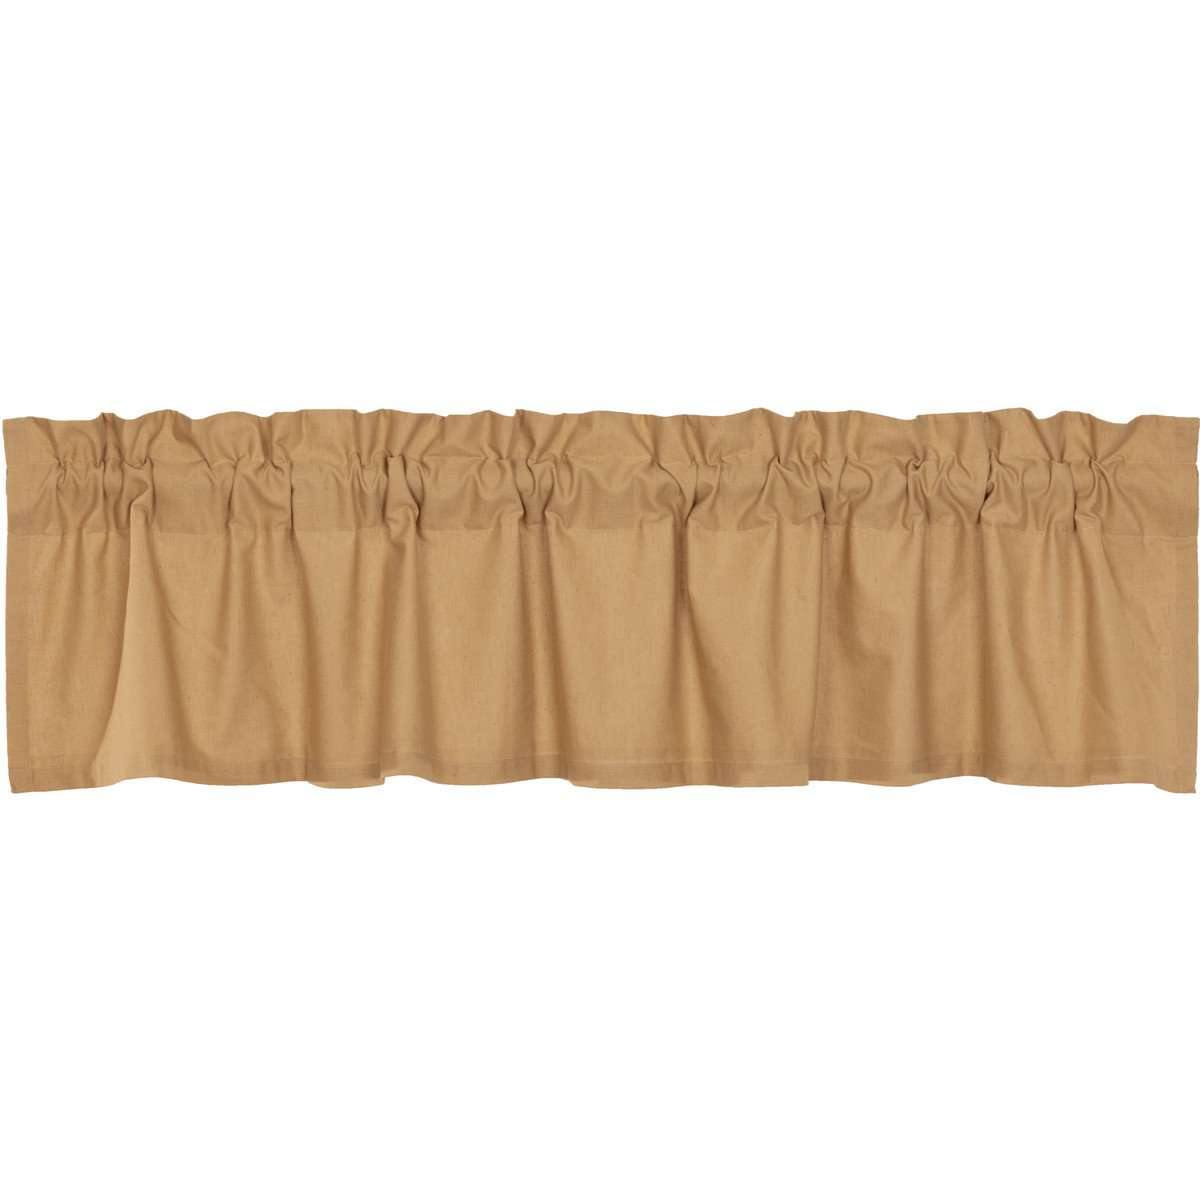 Simple Life Flax Khaki Valance Curtain 16x72 VHC Brands - The Fox Decor